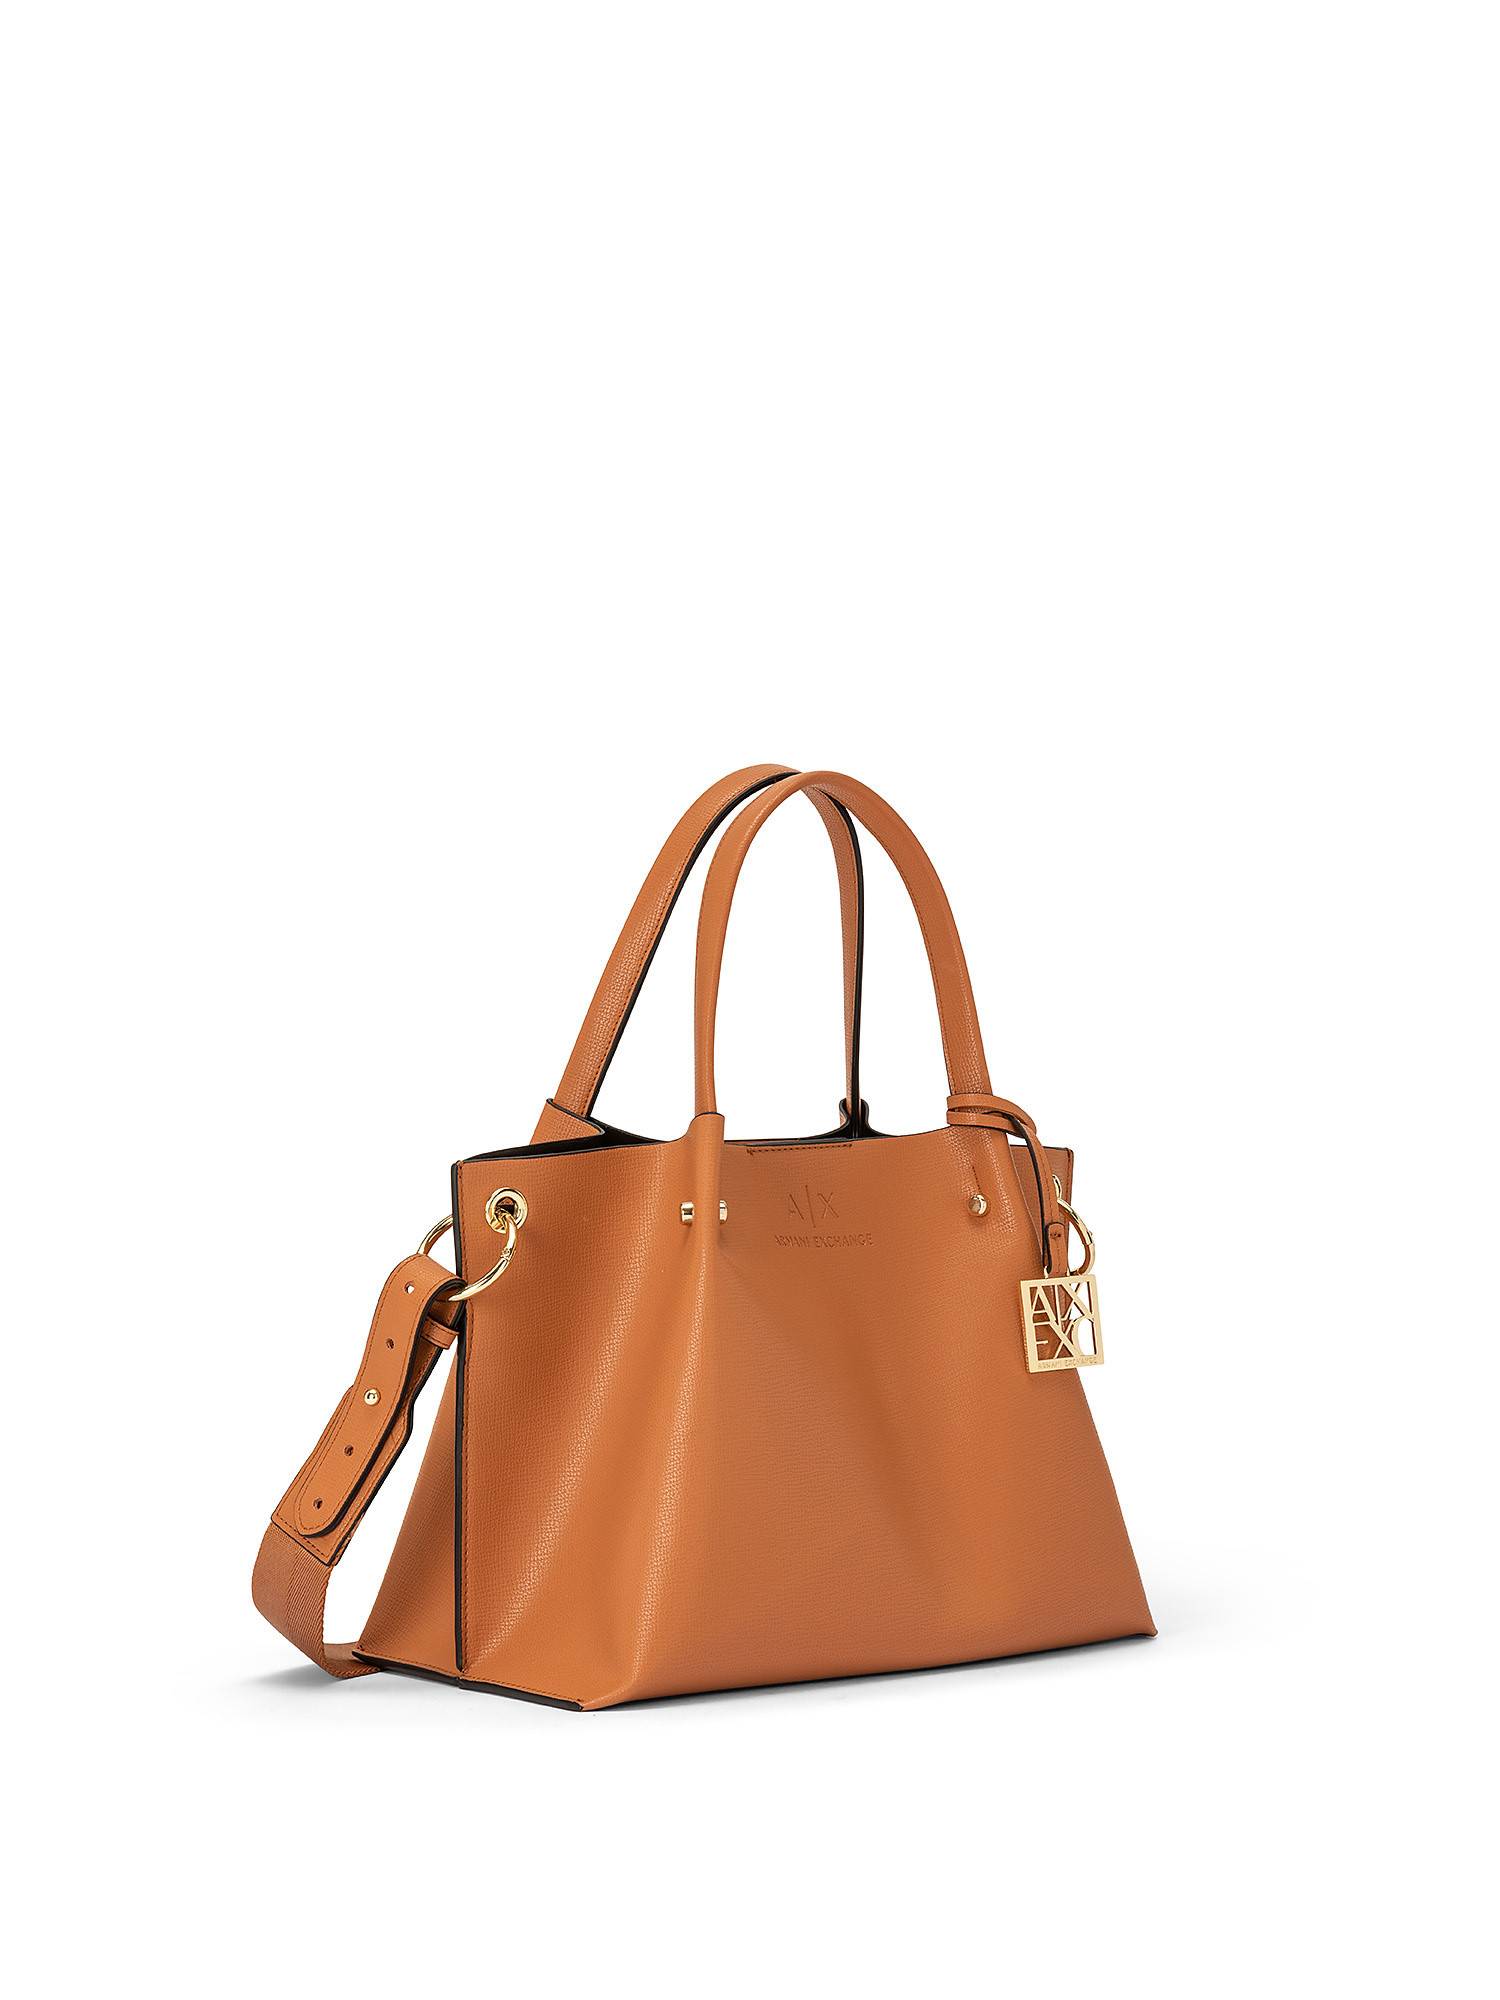 Shopping bag con cerniera superiore, Rosa, large image number 1